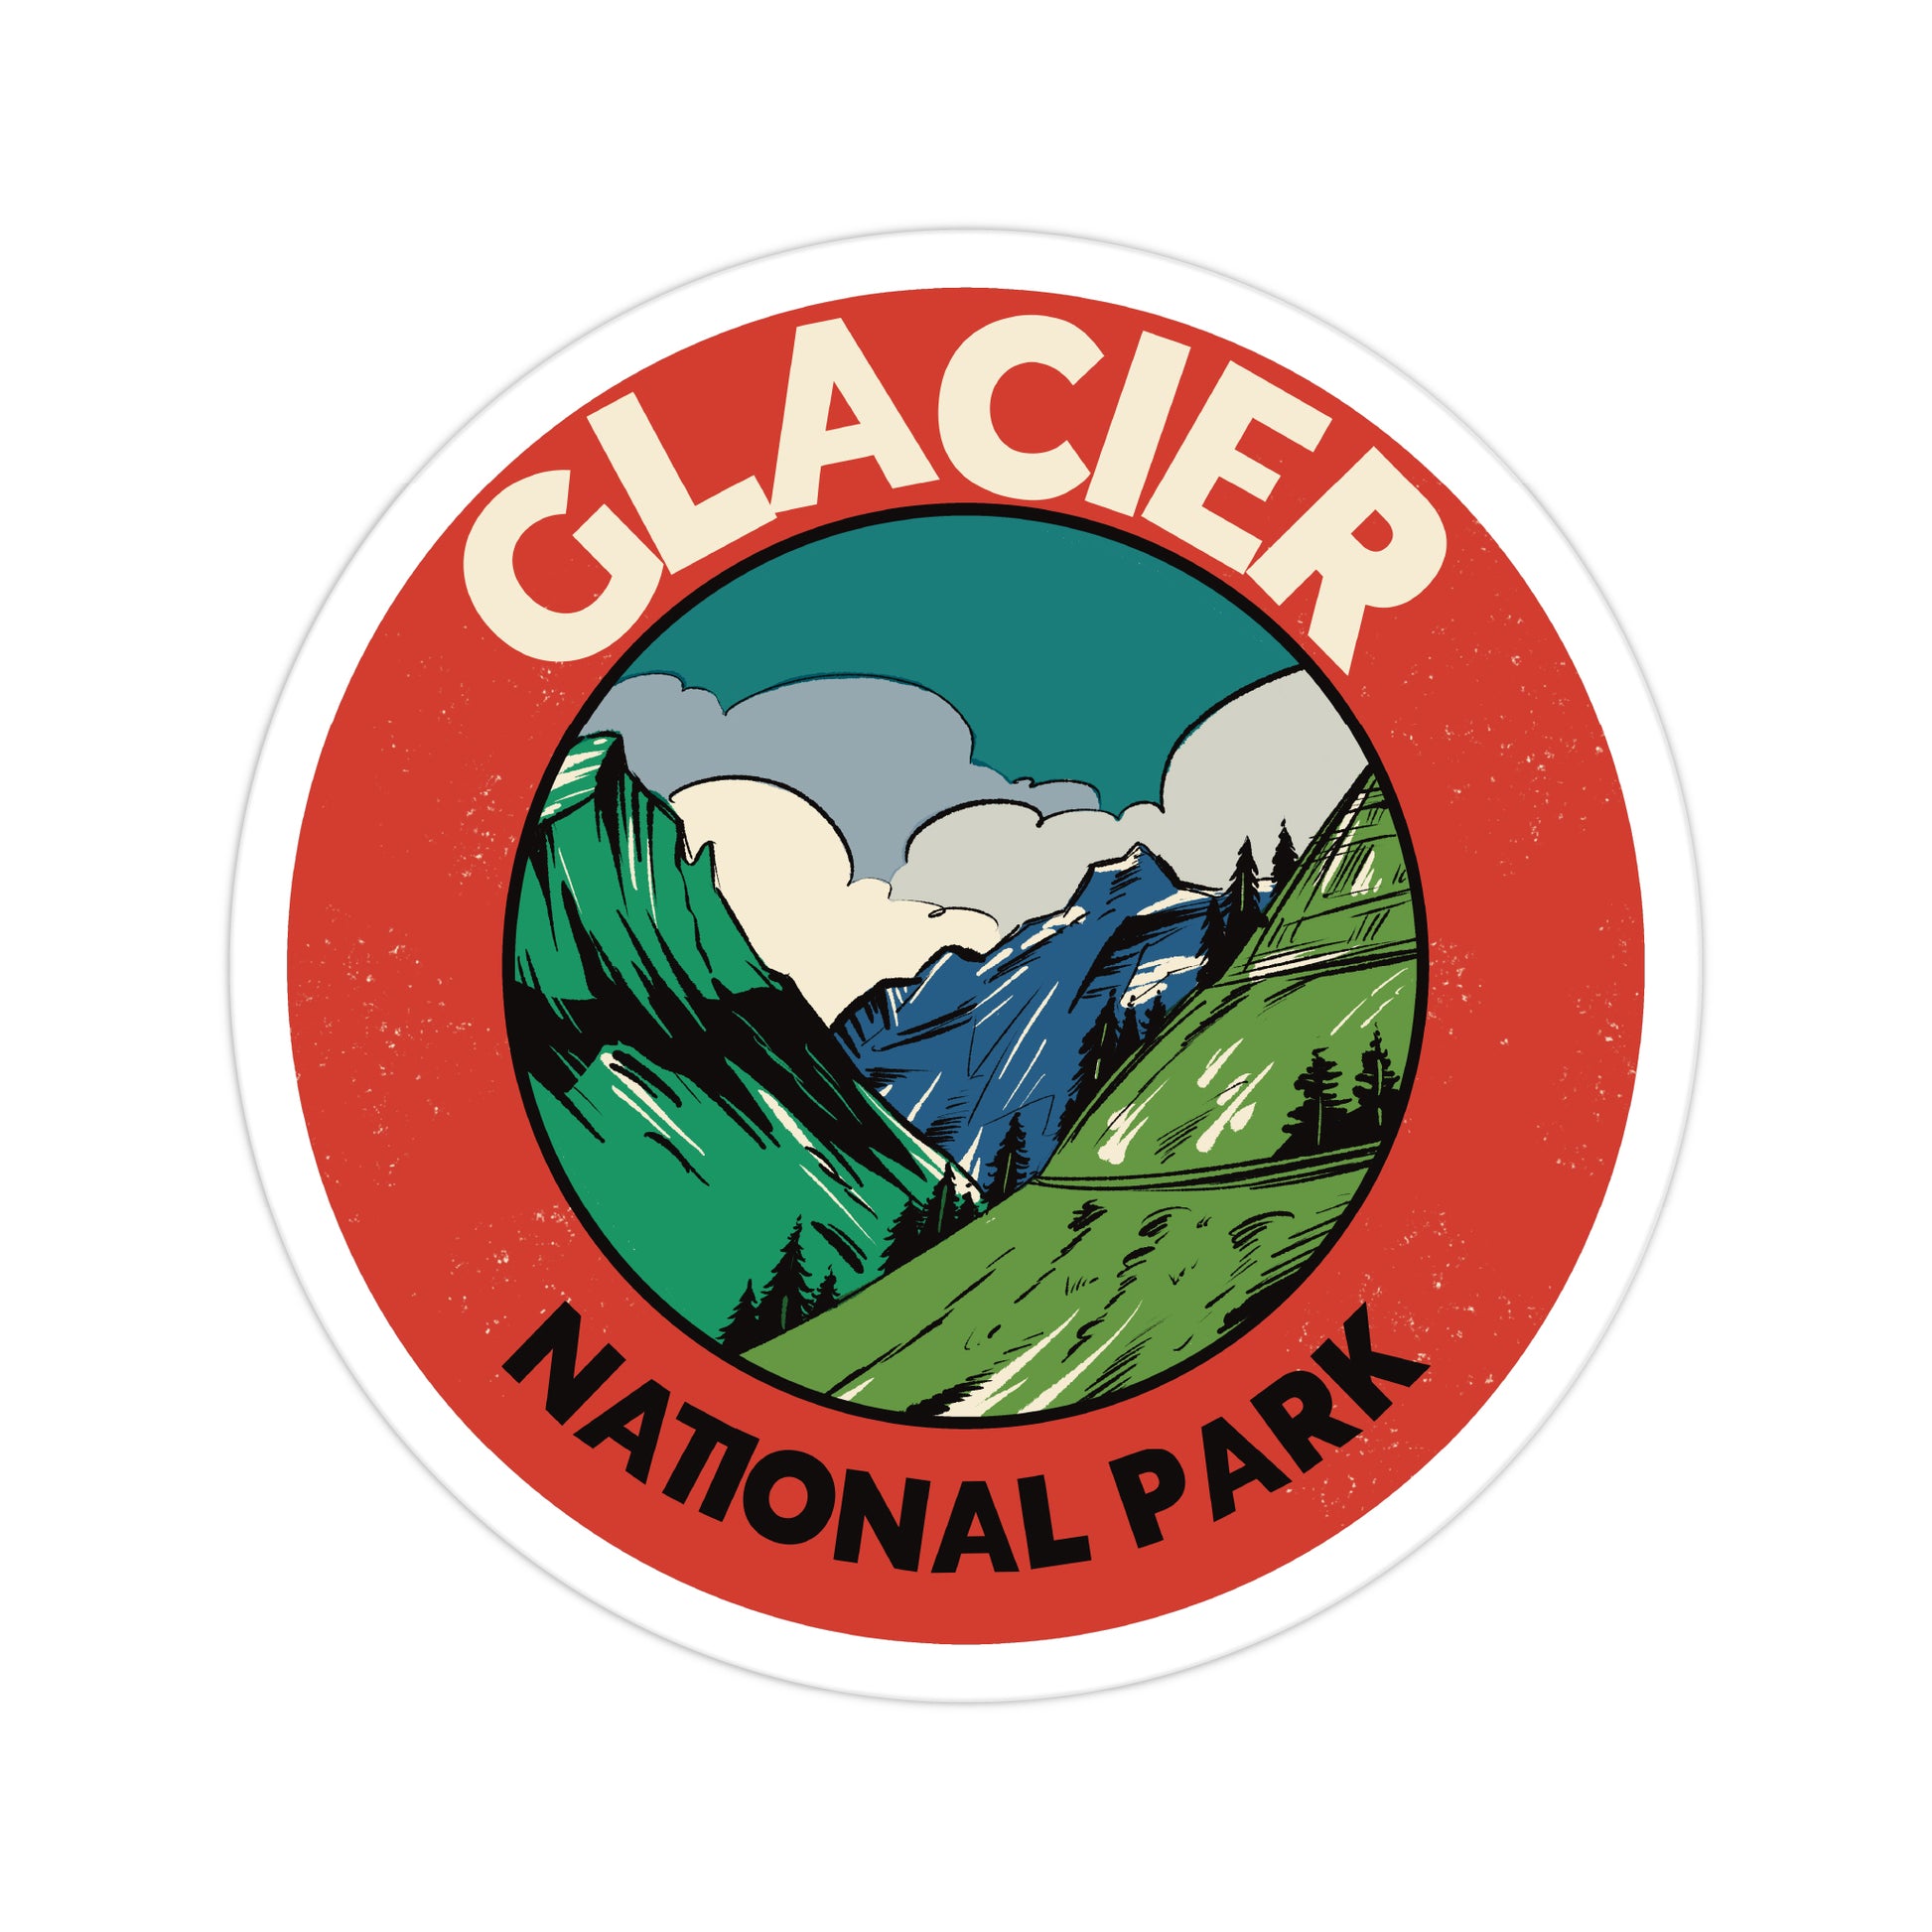 A sticker of Glacier National Park